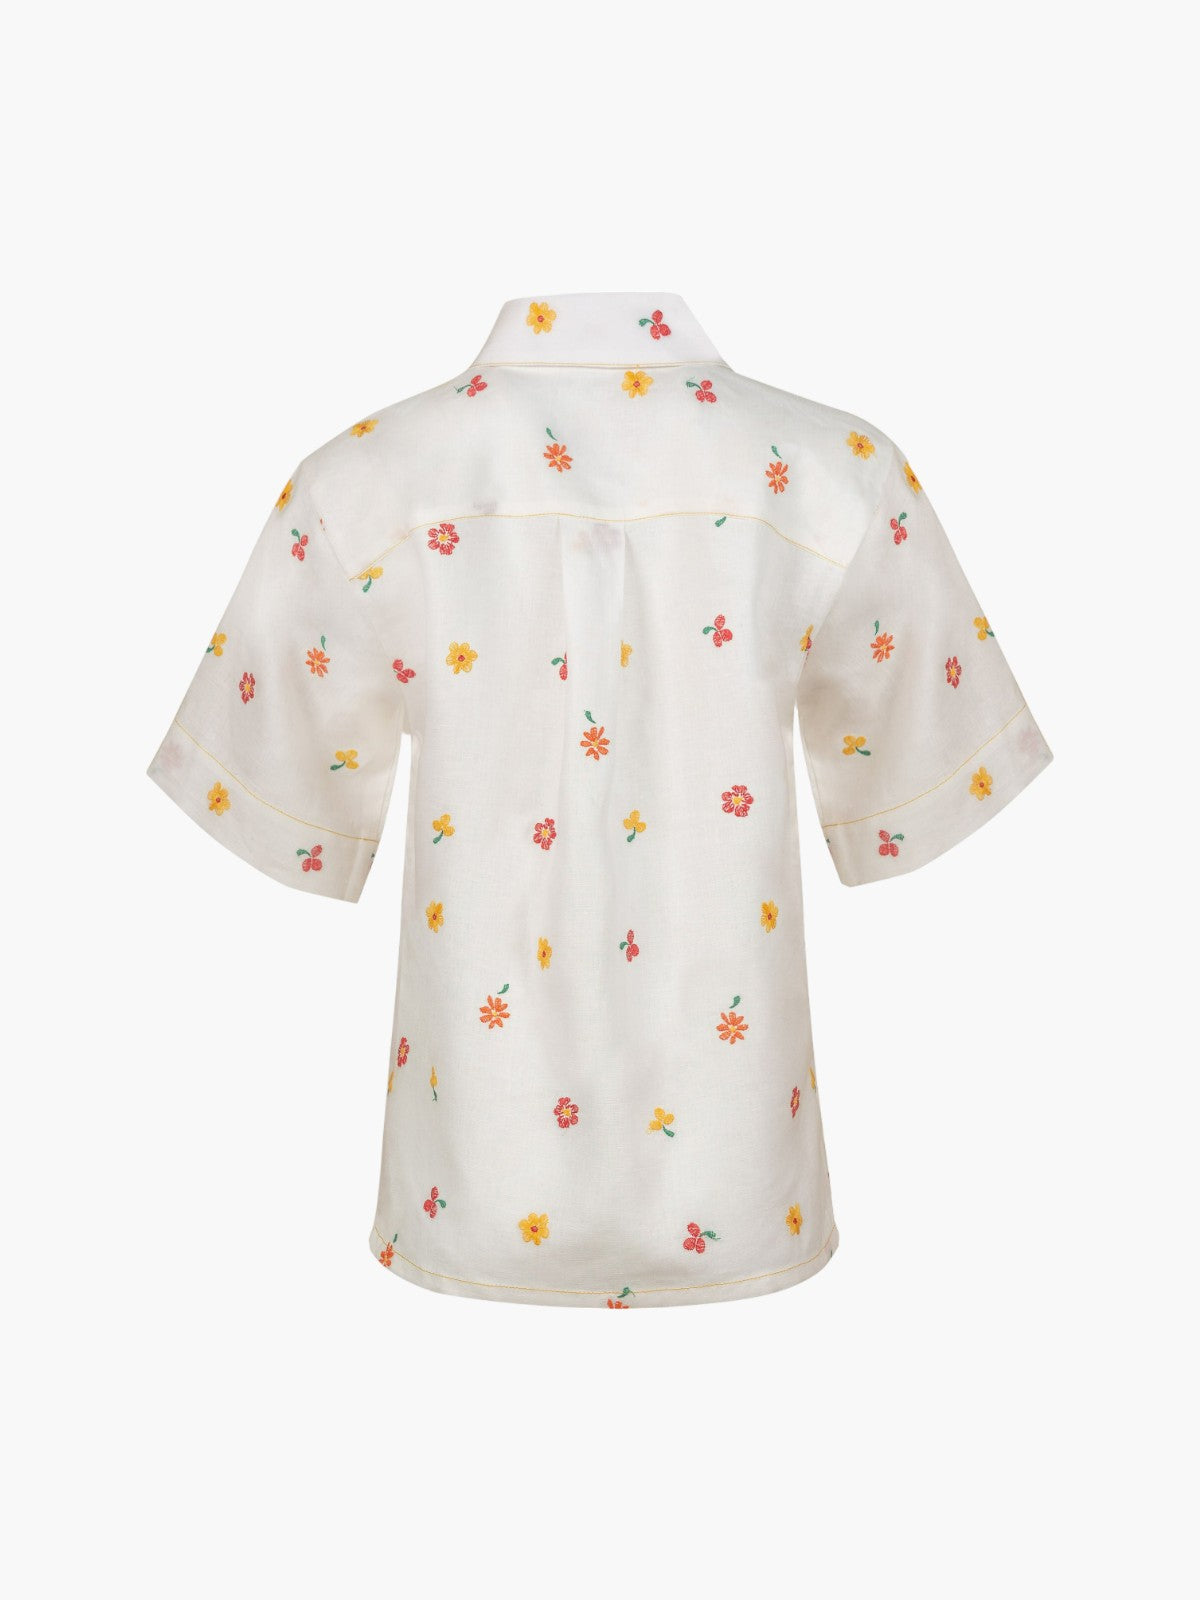 Holiday Button Shirt | Cherry Tomato Holiday Button Shirt | Cherry Tomato